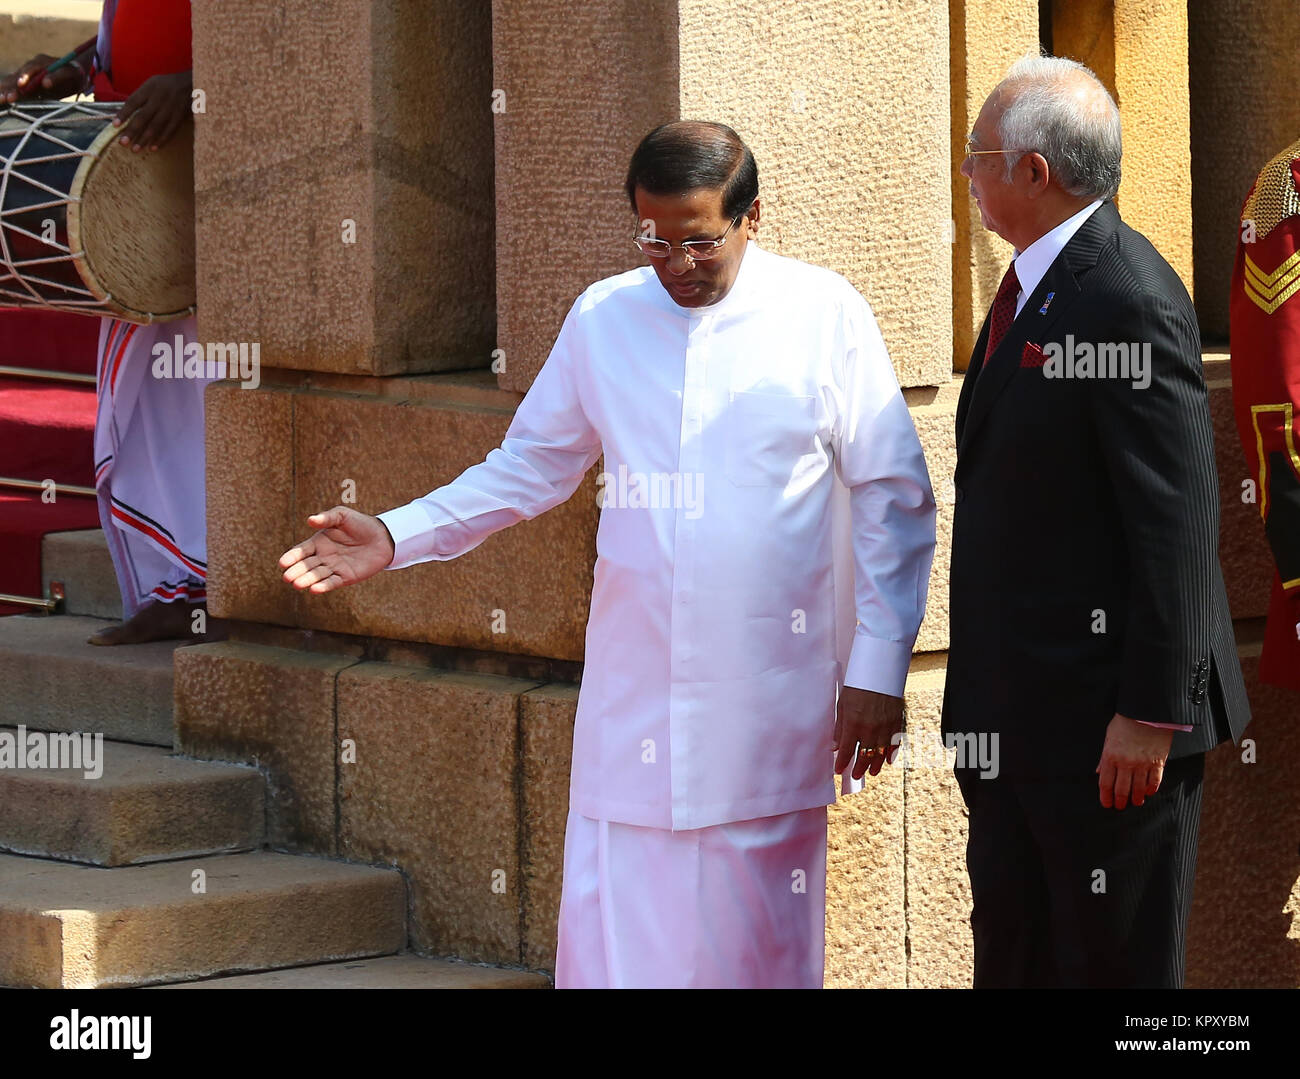 Colombo, Sri Lanka. 18th December, 2017. Malaysia's Prime Minister Najib Razak (R) walks with Sri Lanka's President Maithripala Sirisena during a welcome ceremony in Colombo, Sri Lanka on December 18, 2017. Credit: Pradeep Dambarage/Alamy Live News Stock Photo